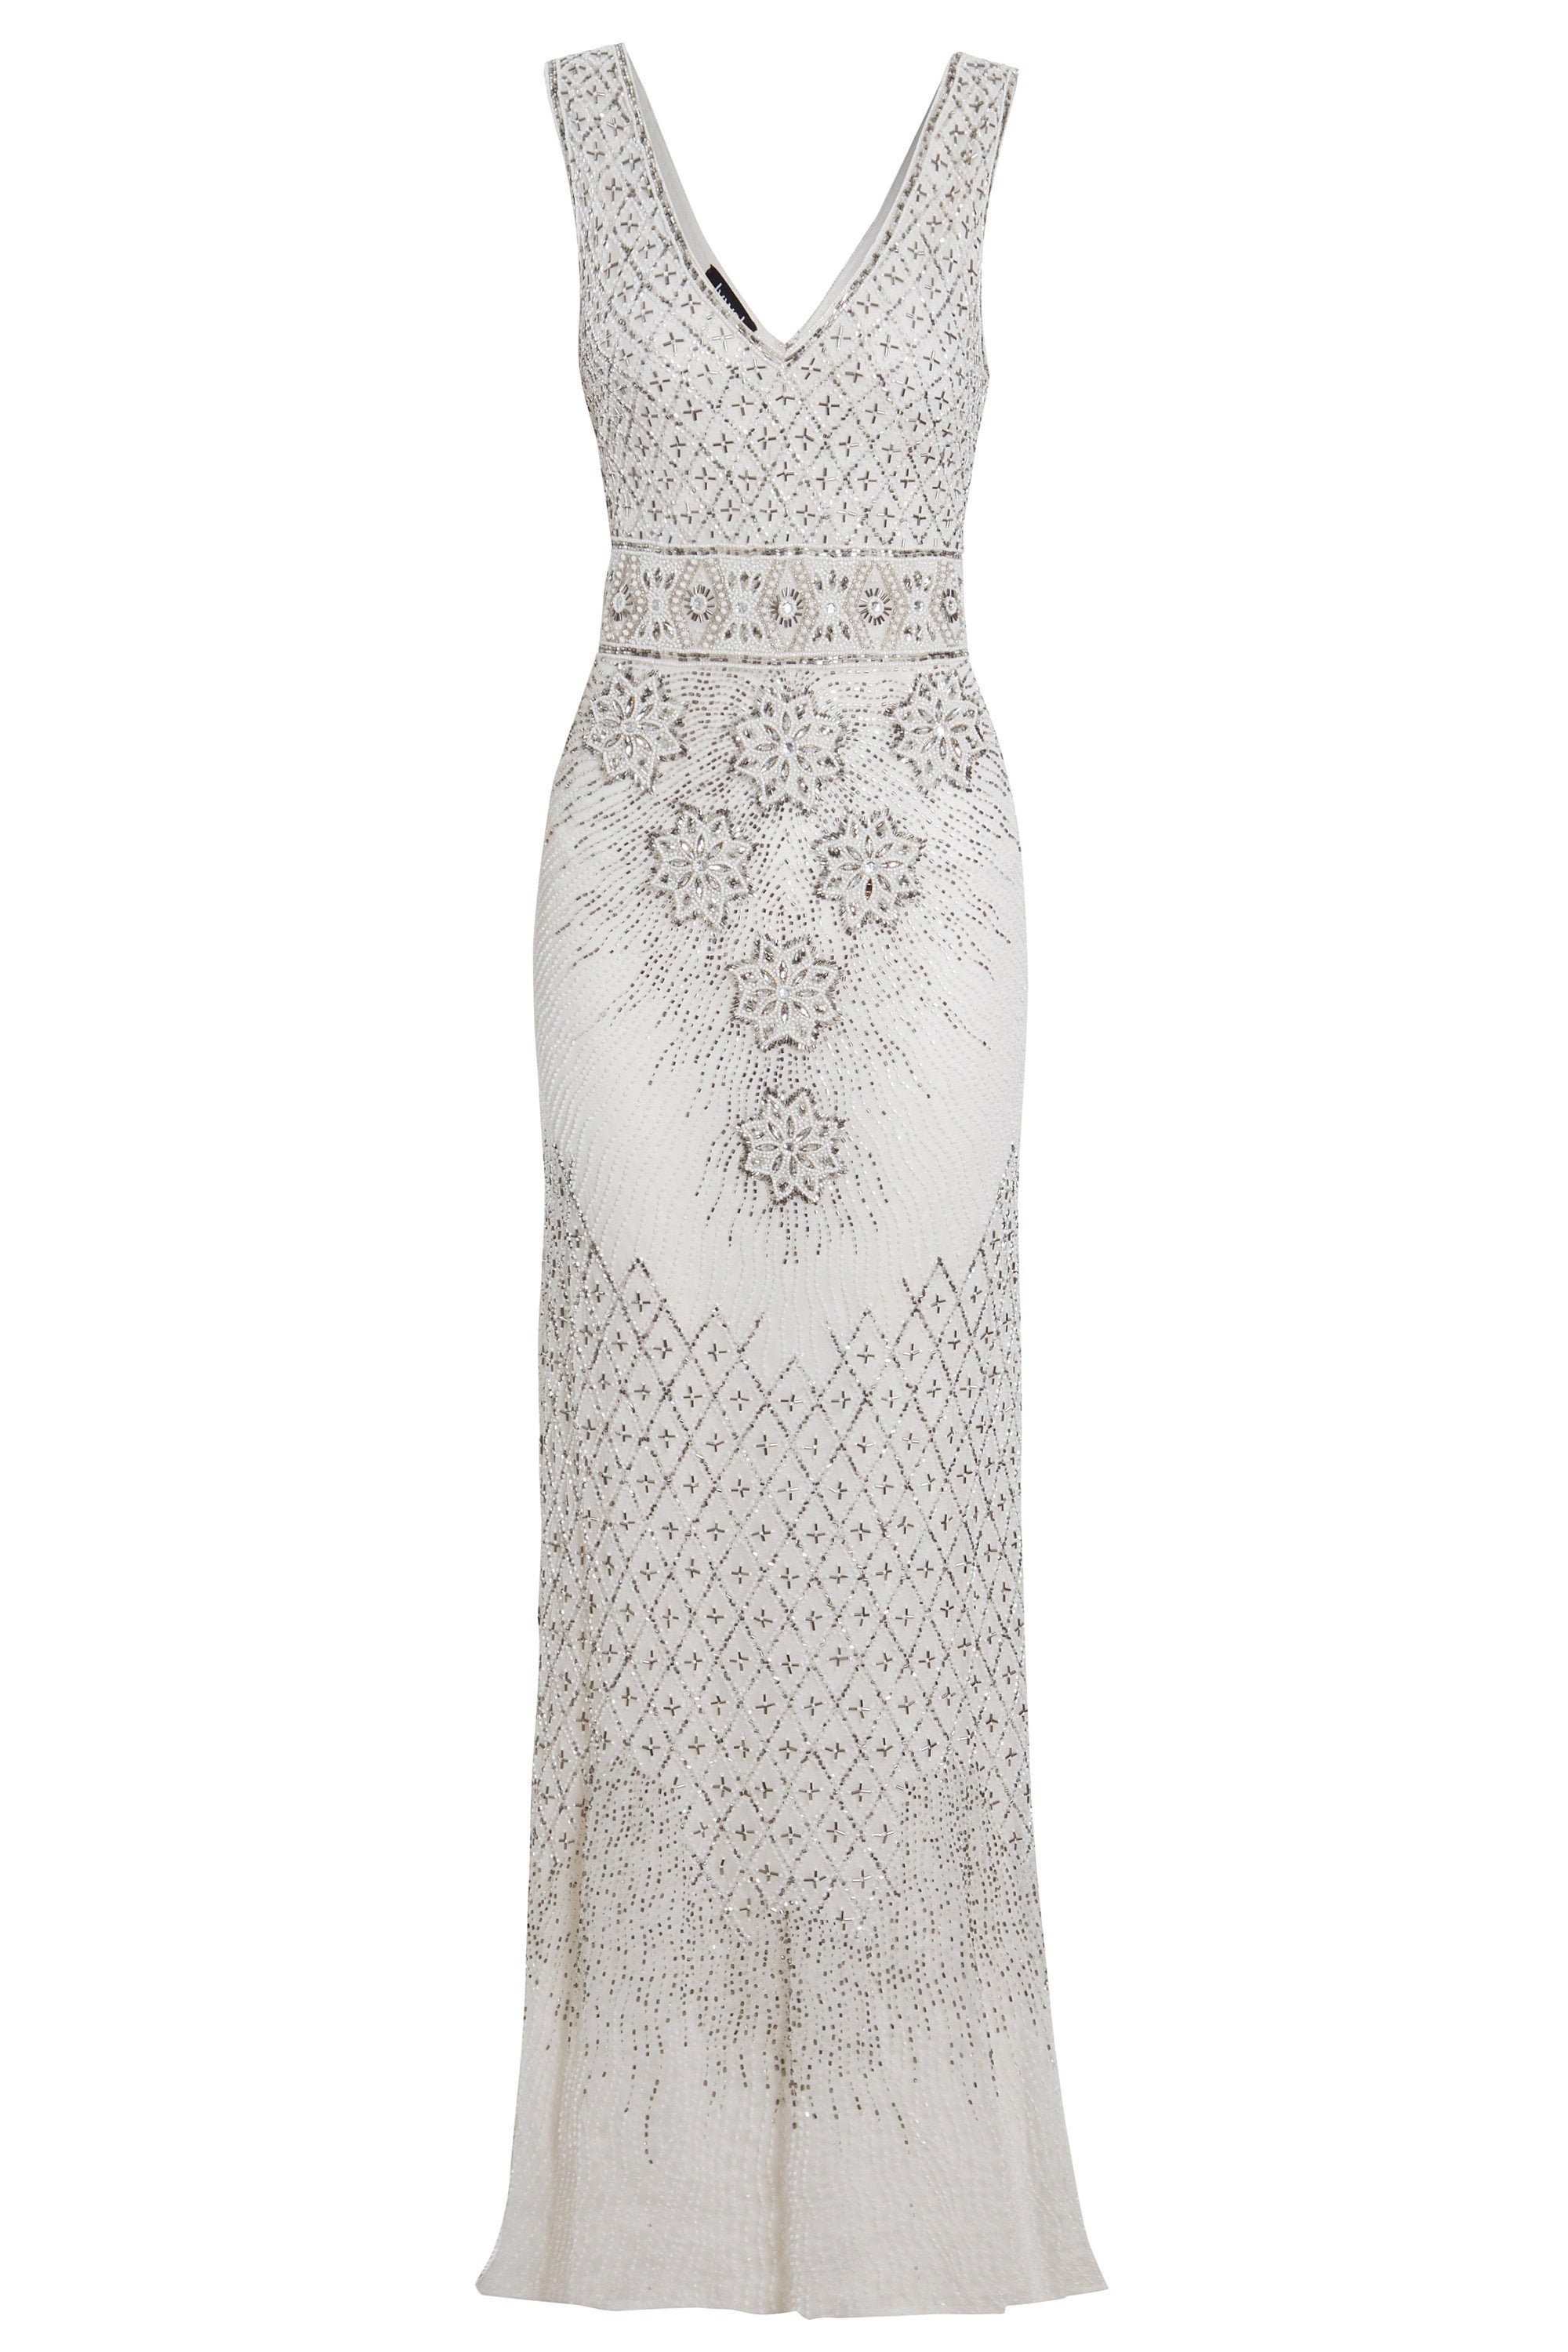 Hazel White Heavy Beaded Bridal Dress 1920s Gatsby Inspired - Etsy UK